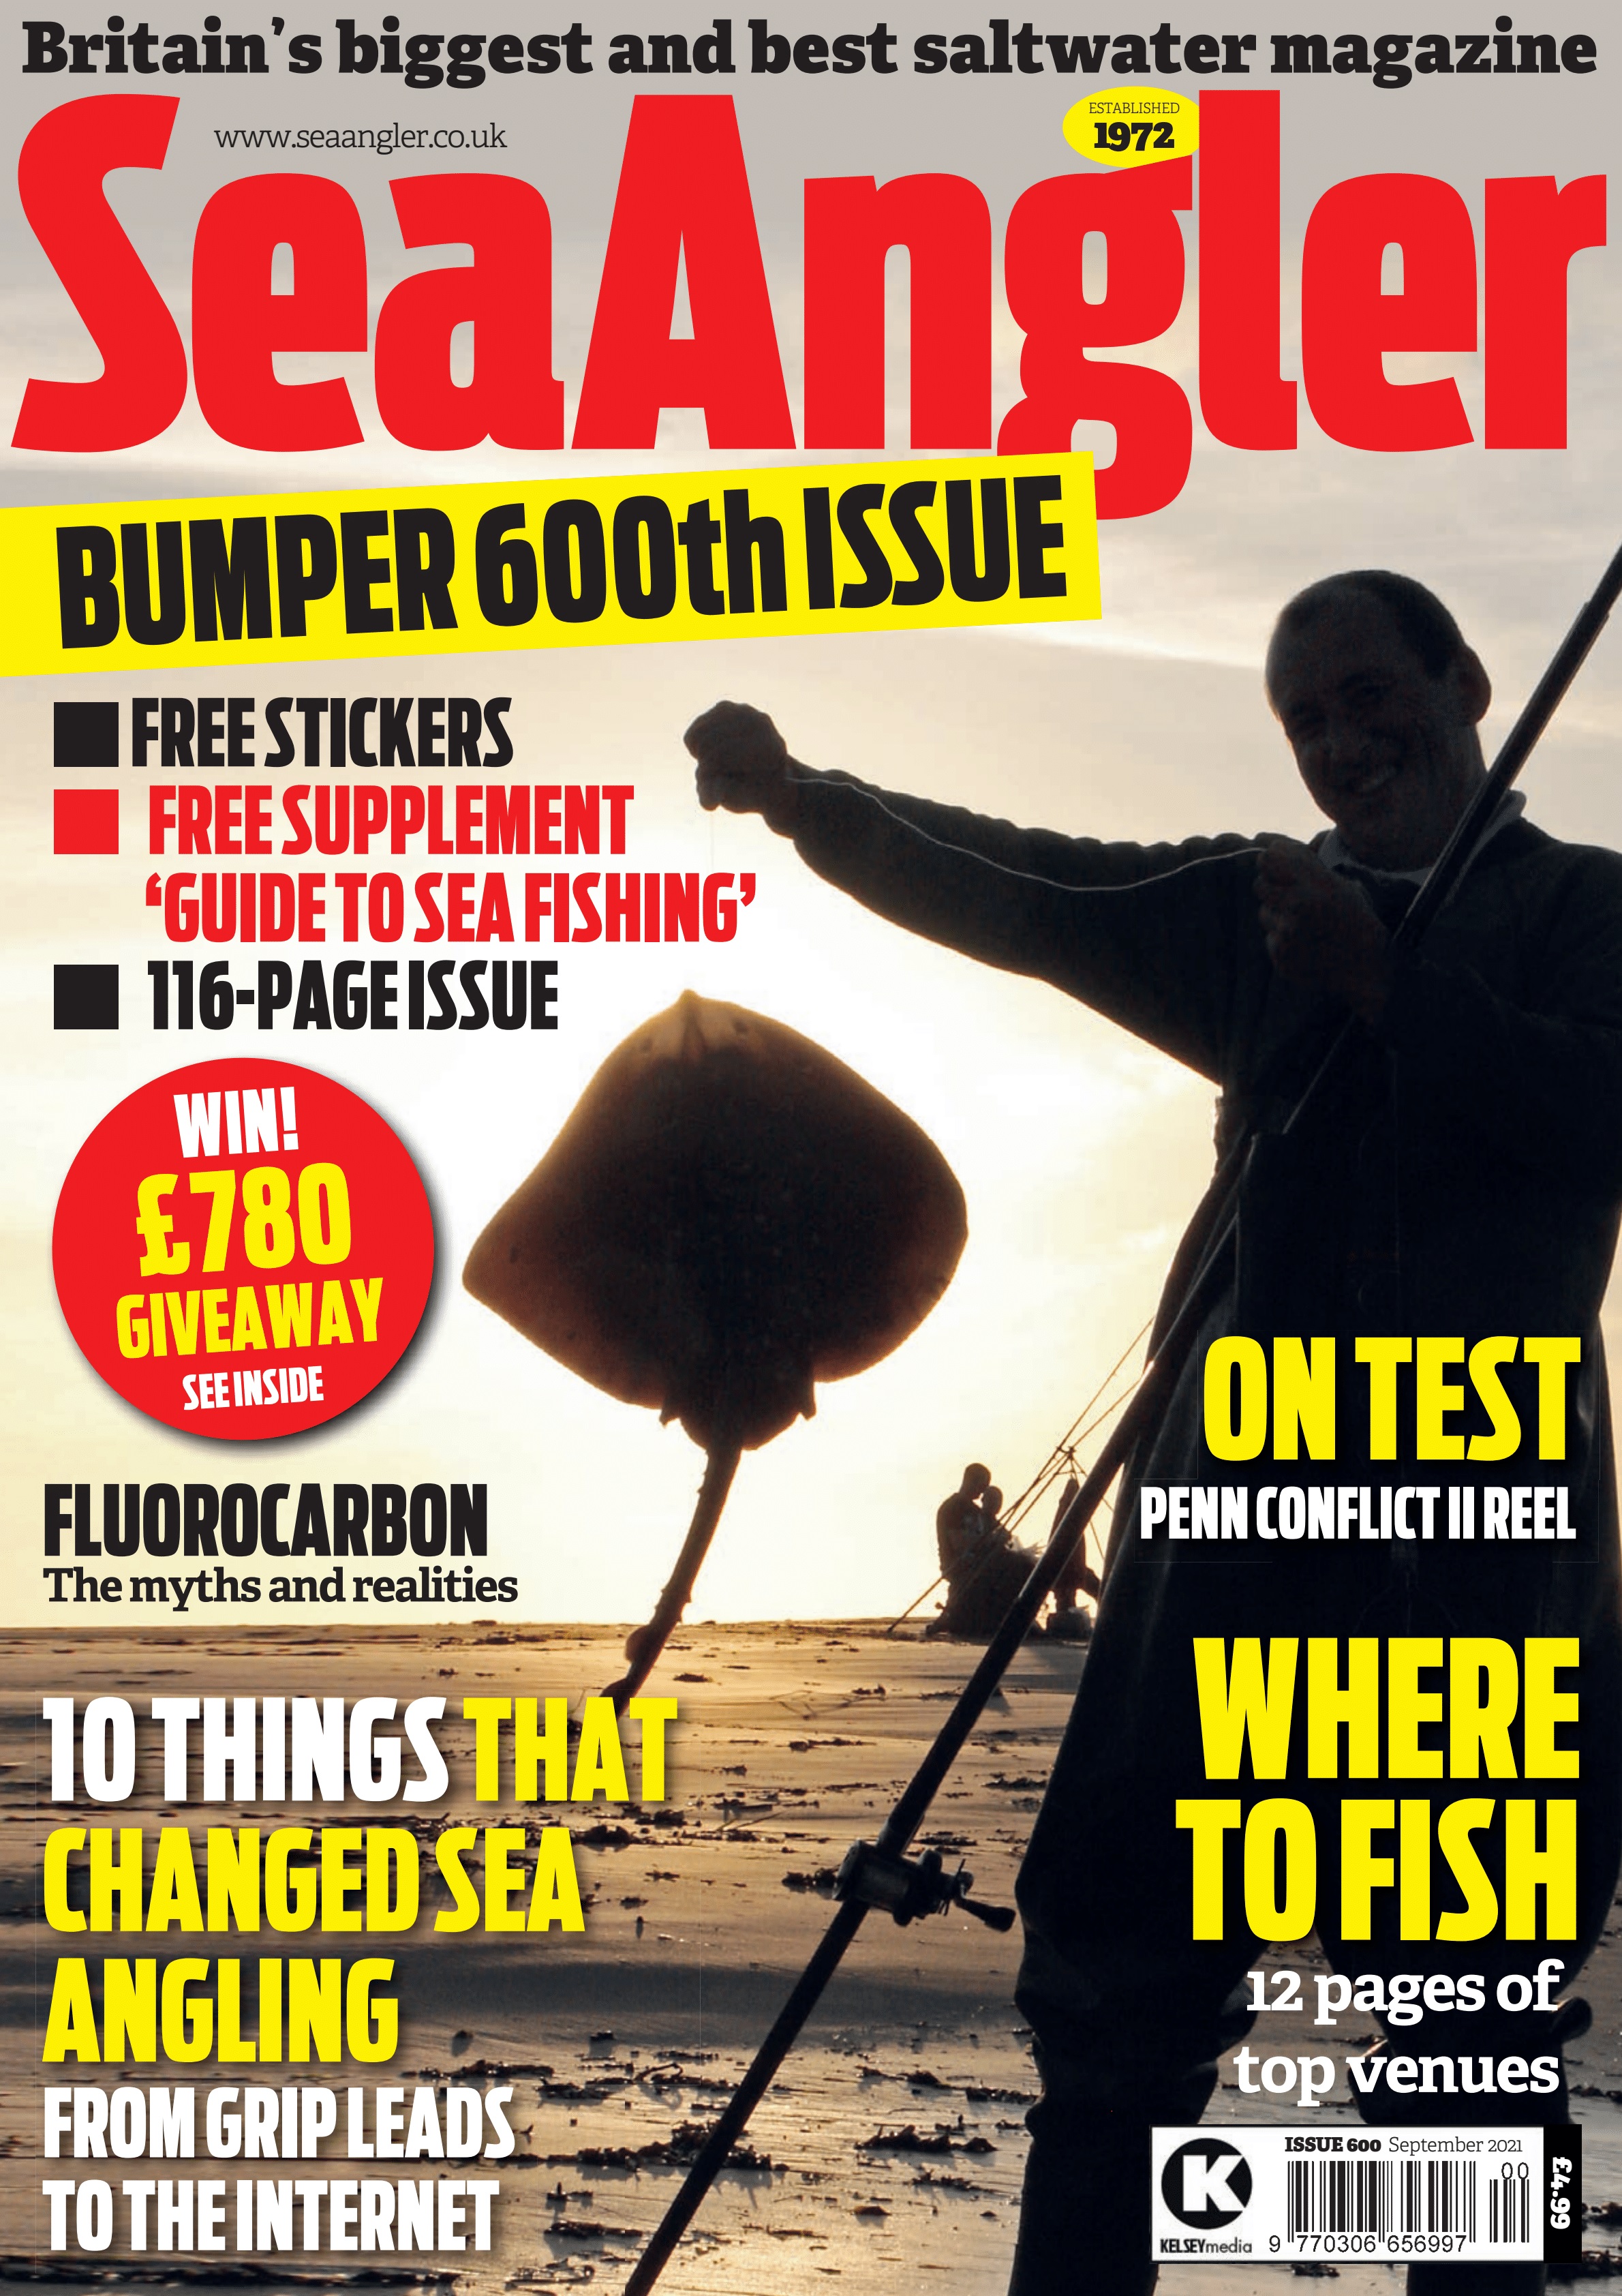 Sea Angler 600 September 2021 - Bumper 600th Issue